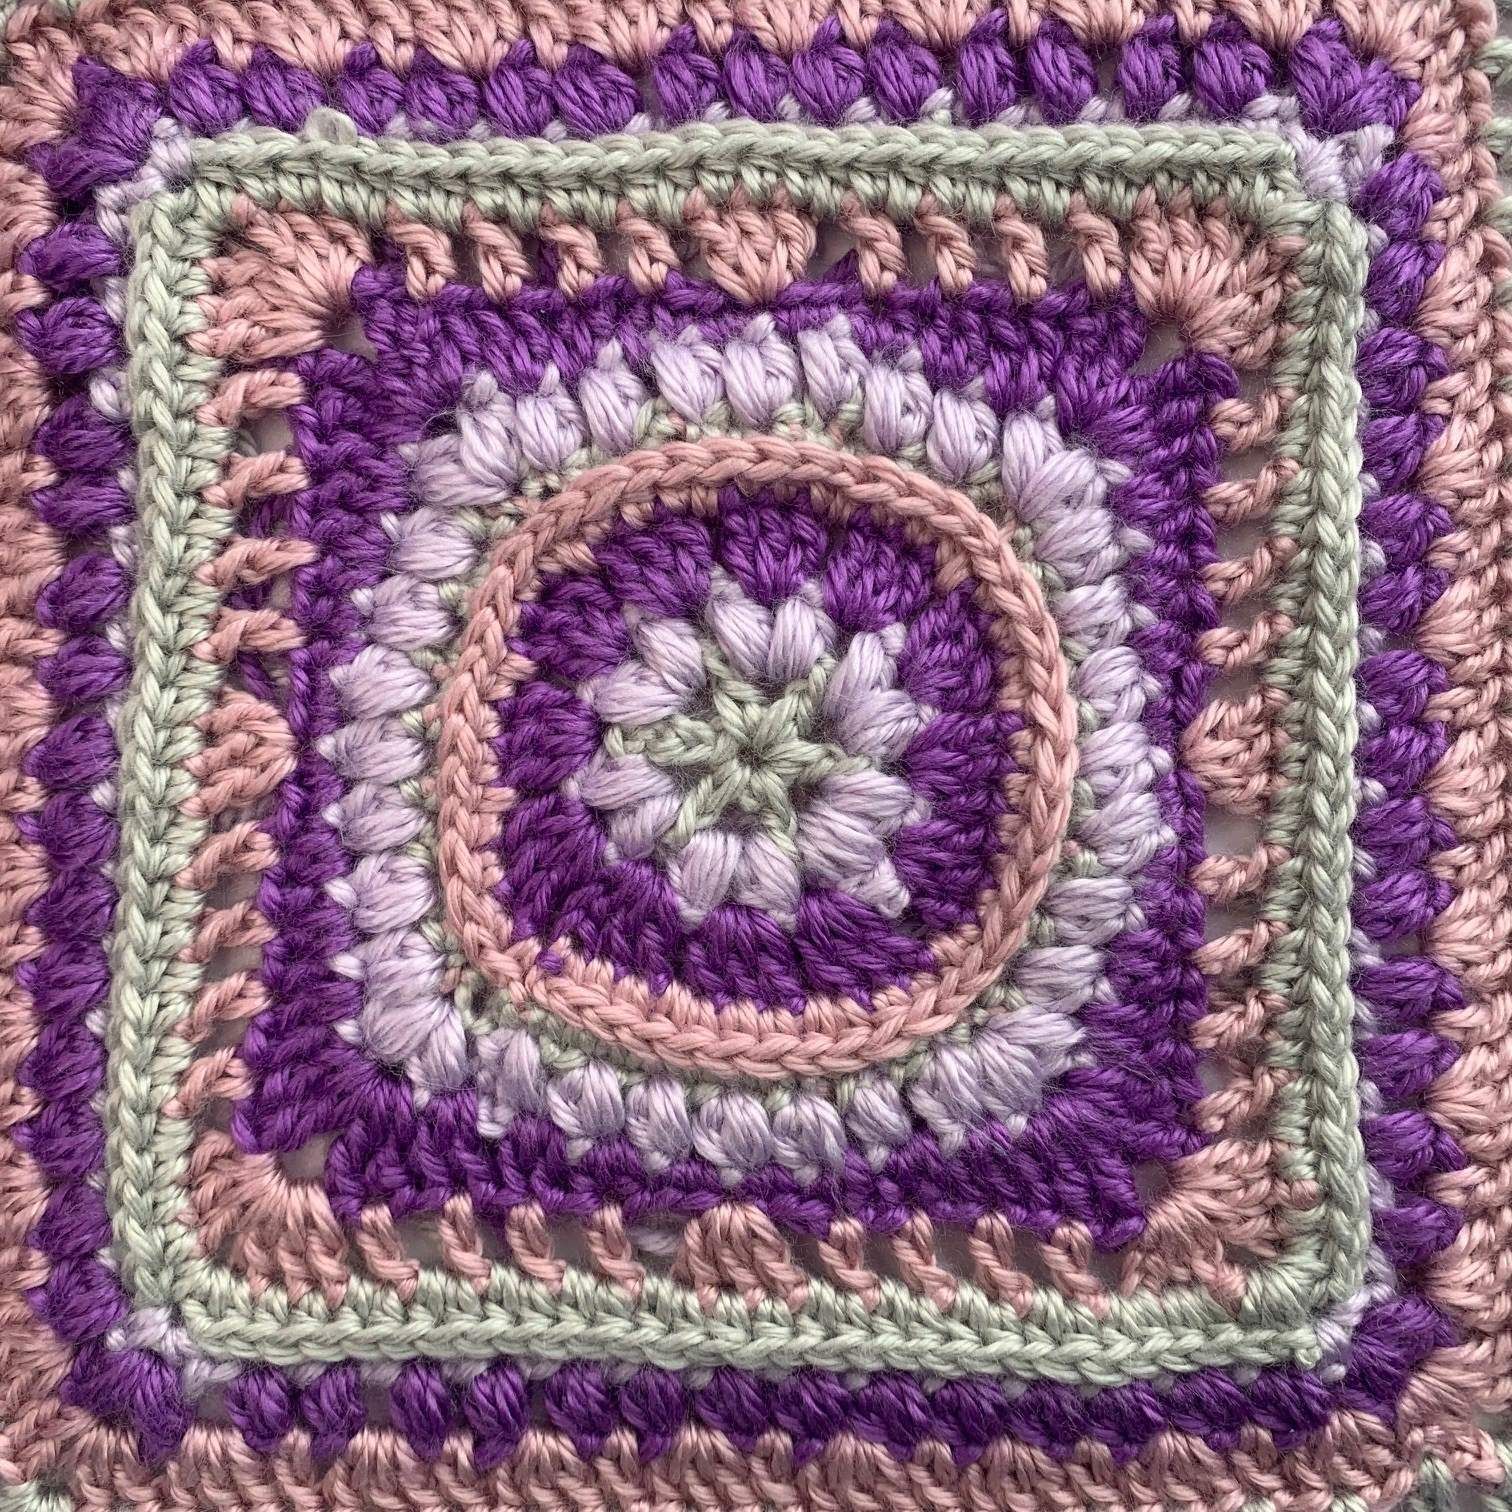 Textured Crochet Blanket Square Pattern Free